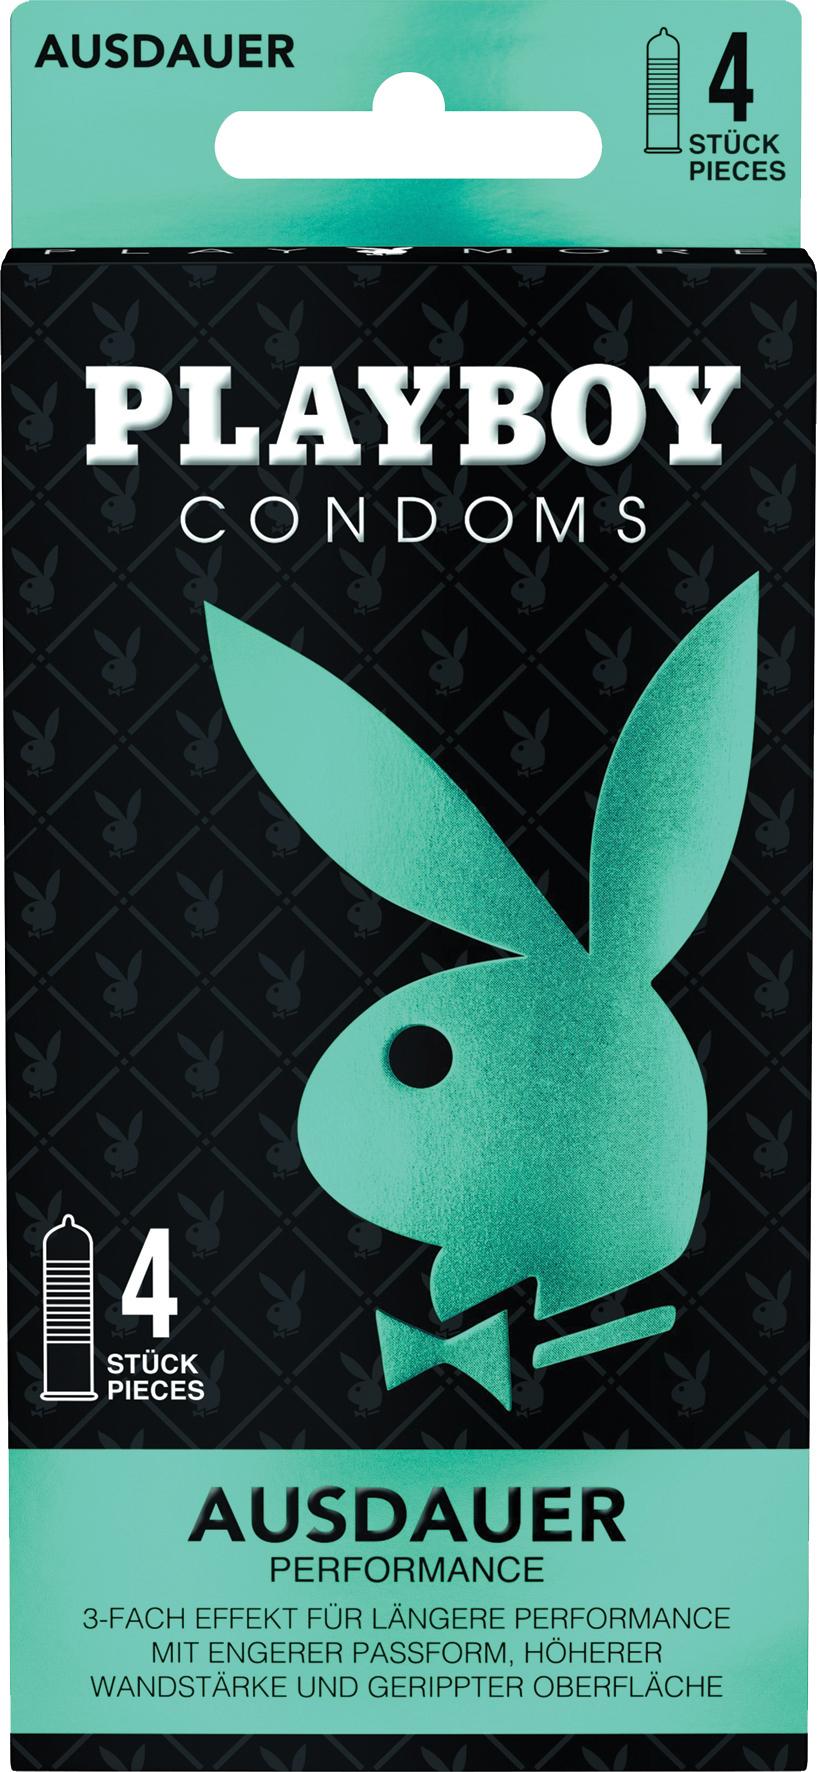  "PLAYBOY Condoms Ausdauer 4er"